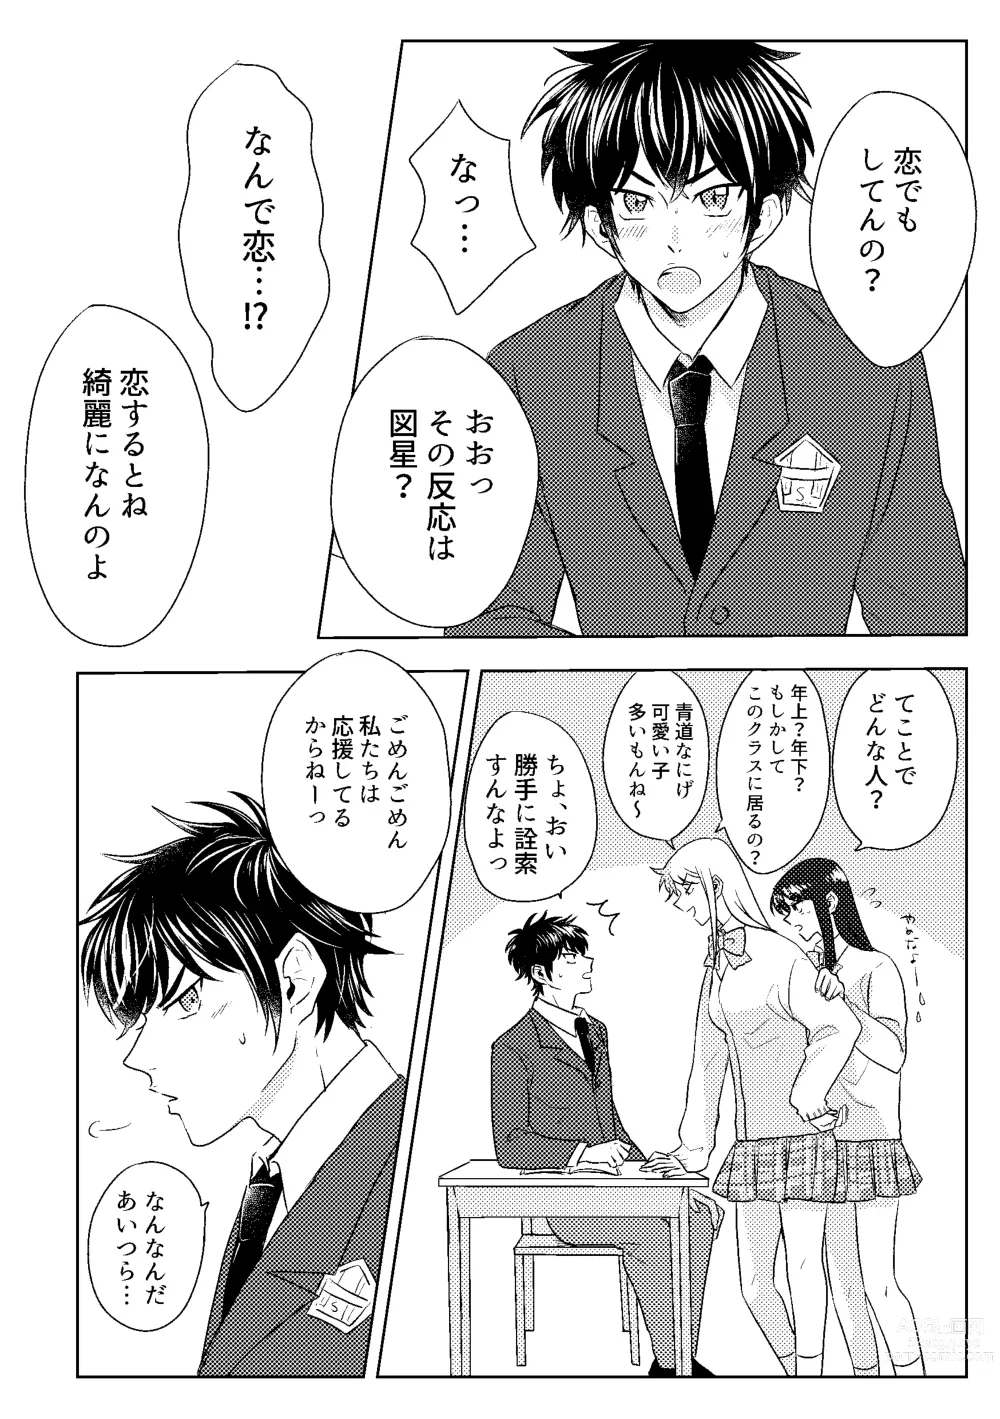 Page 4 of doujinshi Hatsukoi Sparkle